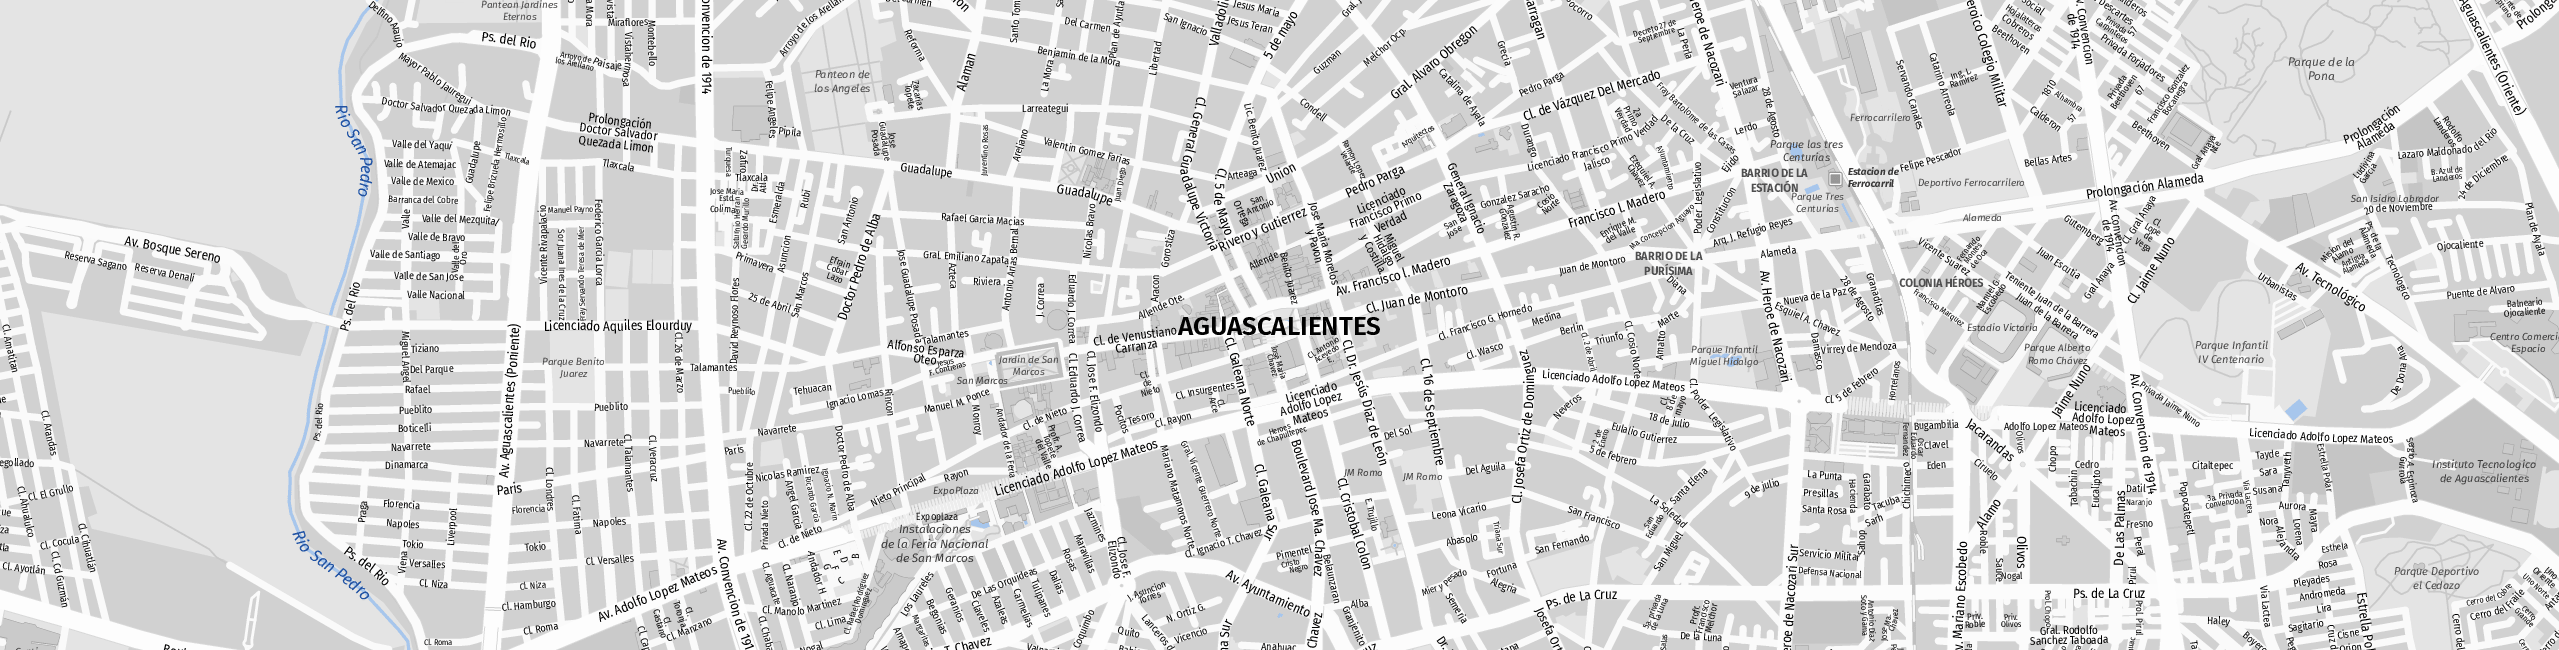 Stadtplan Aguascalientes zum Downloaden.